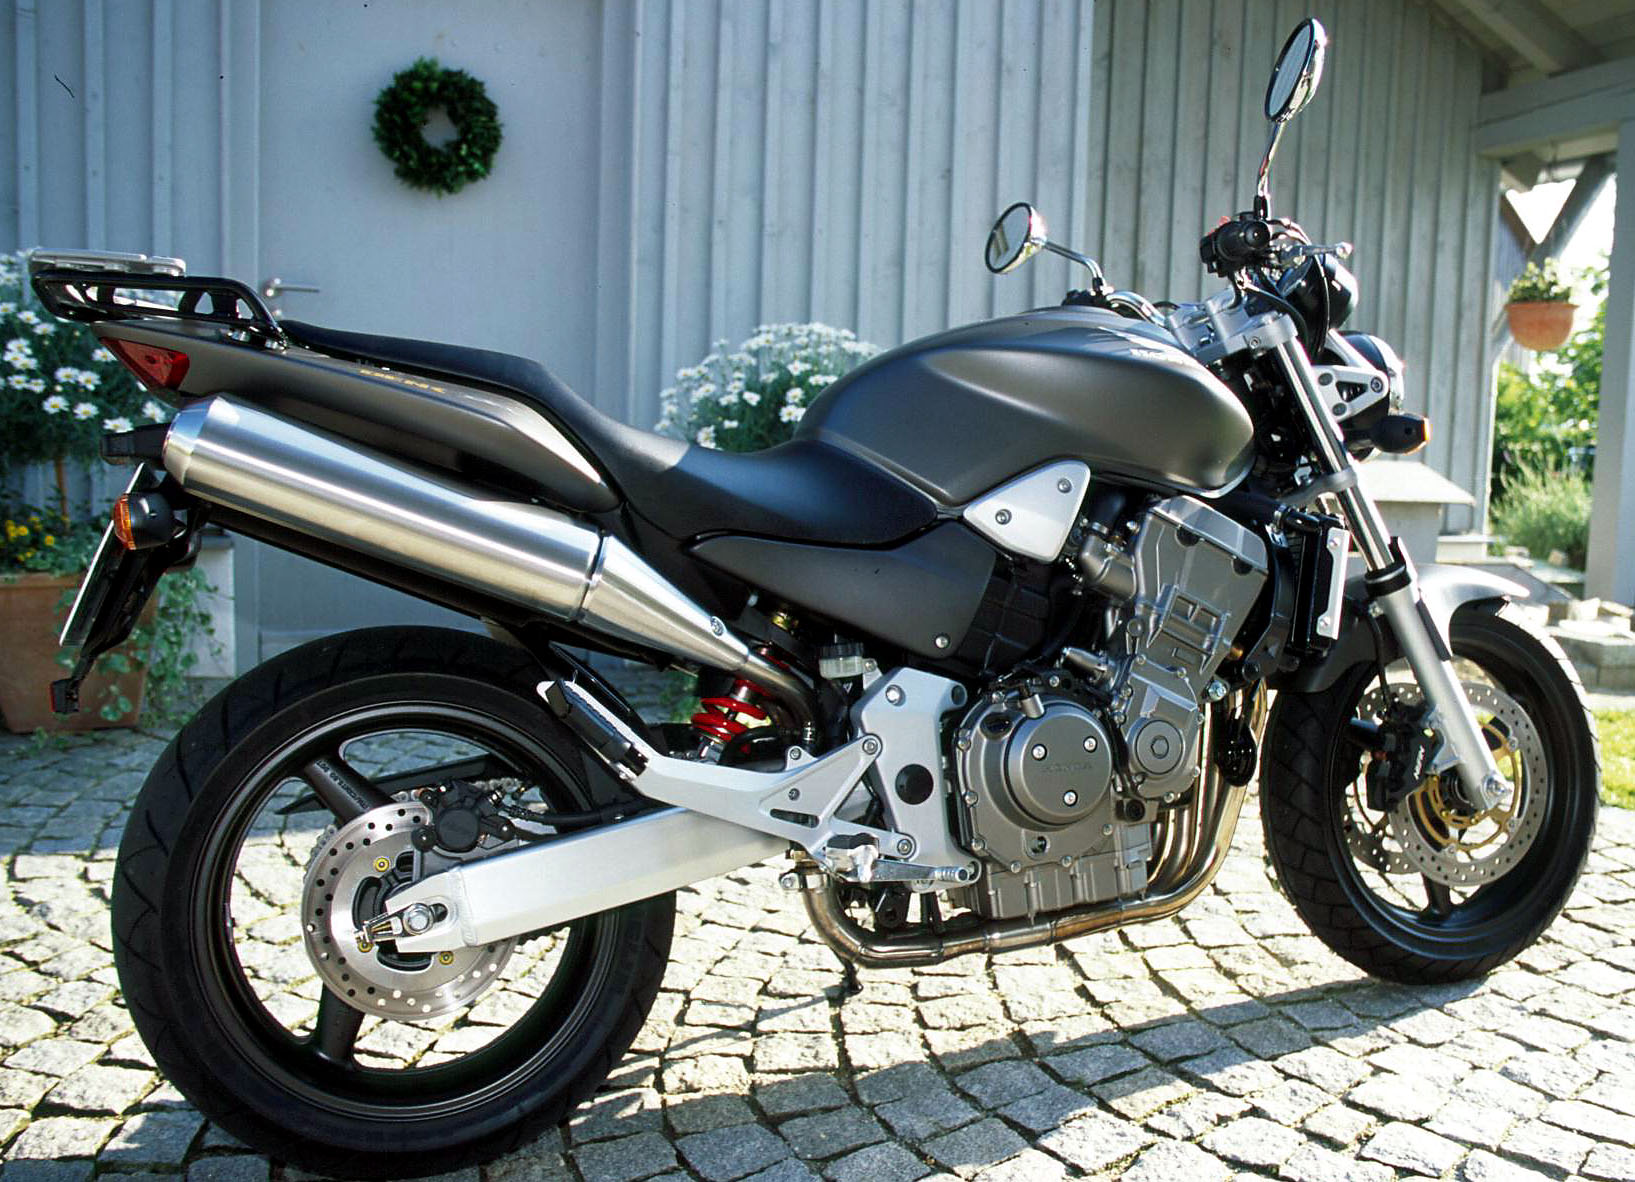 My custom Honda CB 919 cb900f (Honda Hornet) naked bike 